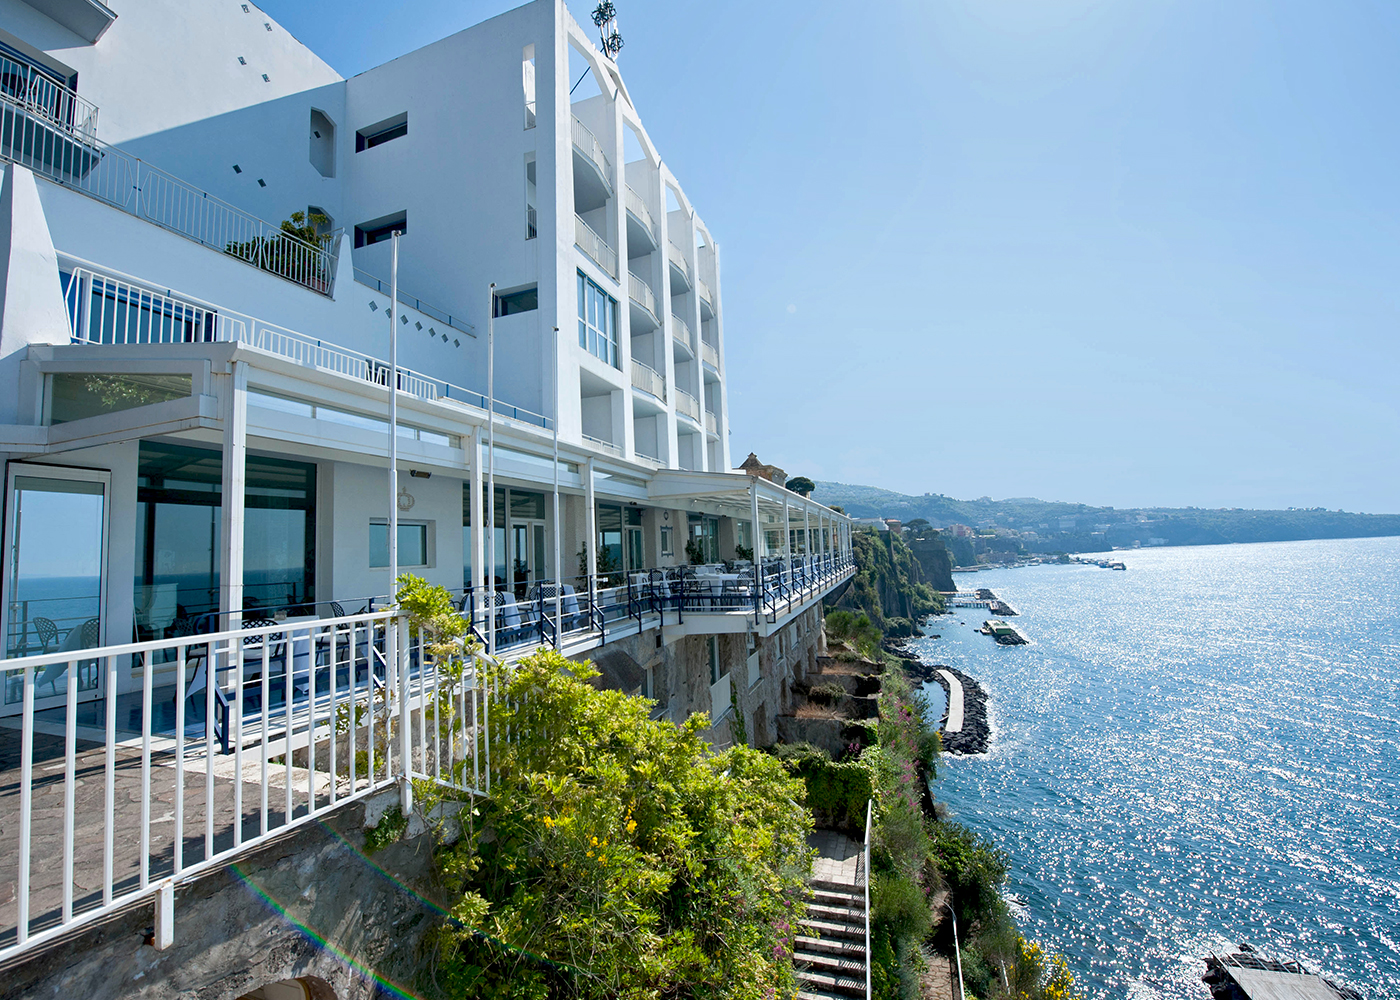 Luxury Hotel in Sorrento overlooking the sea.